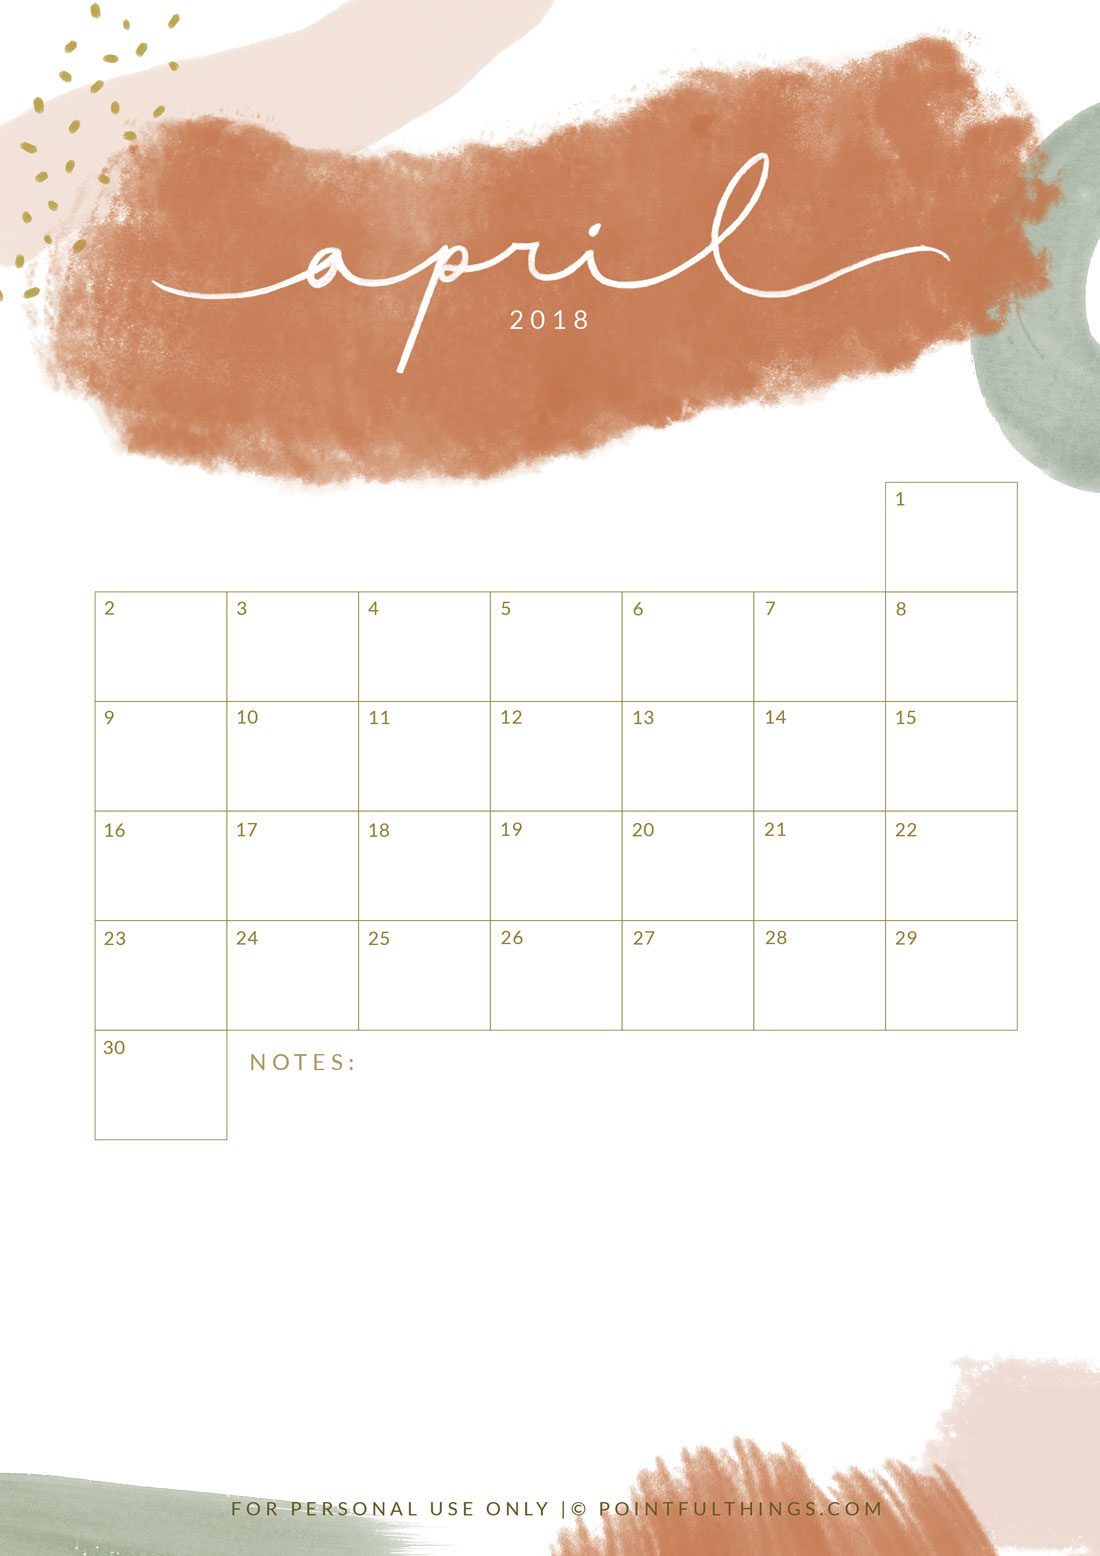 Printable | Kalender 2018 - Pointful Things